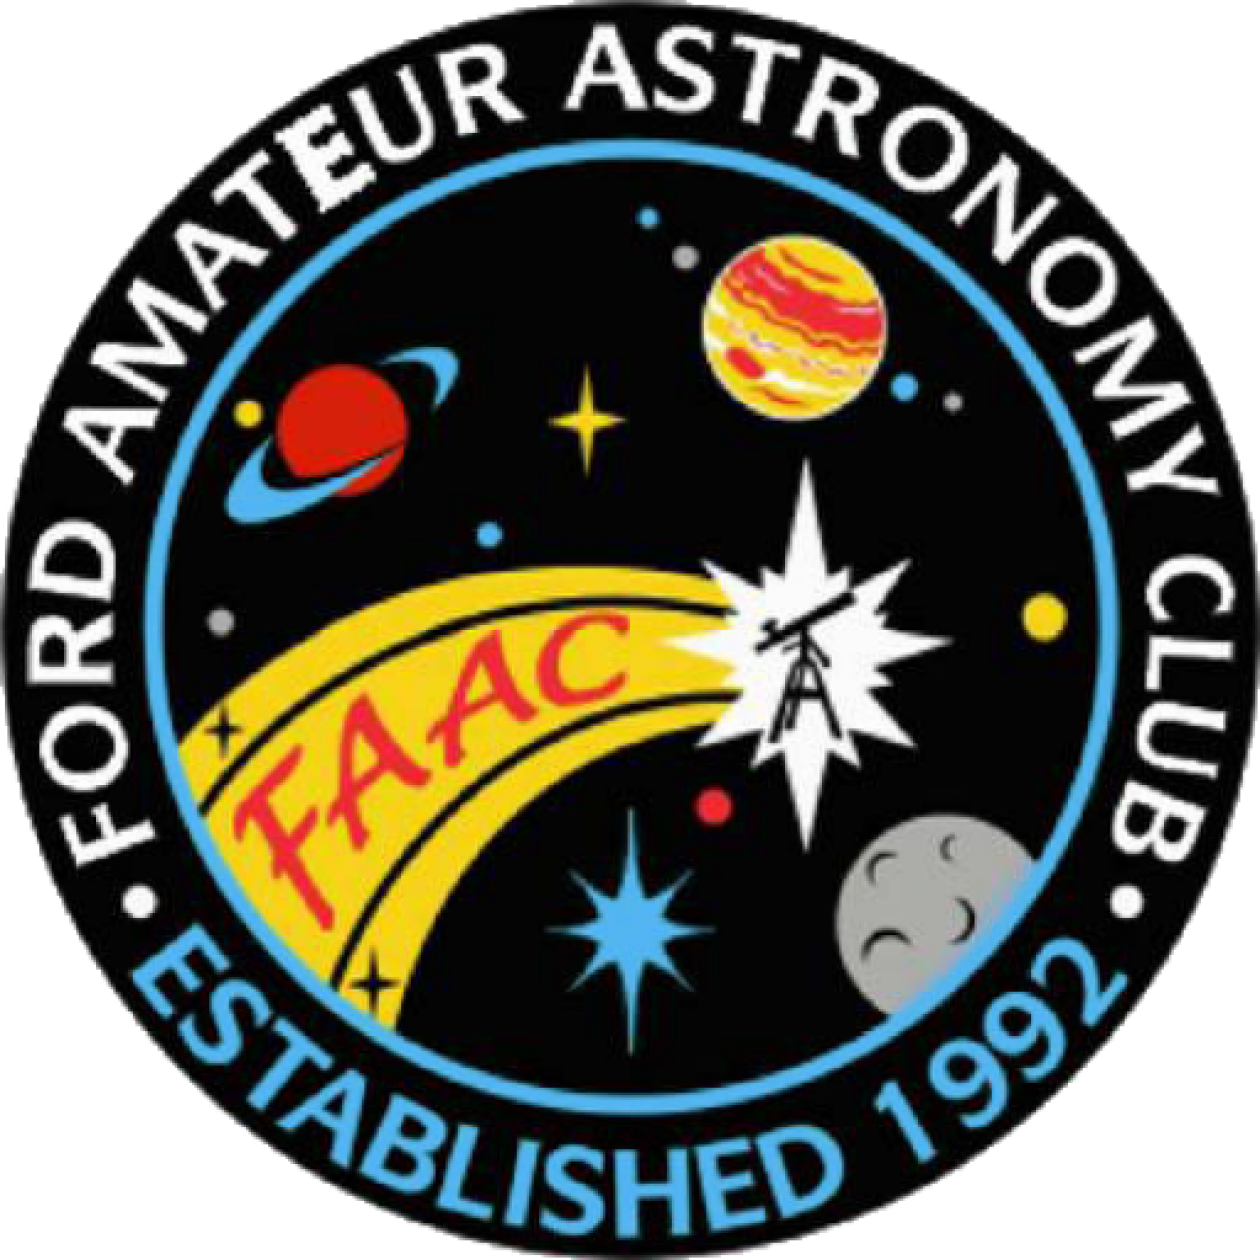 Amateur astronomers club